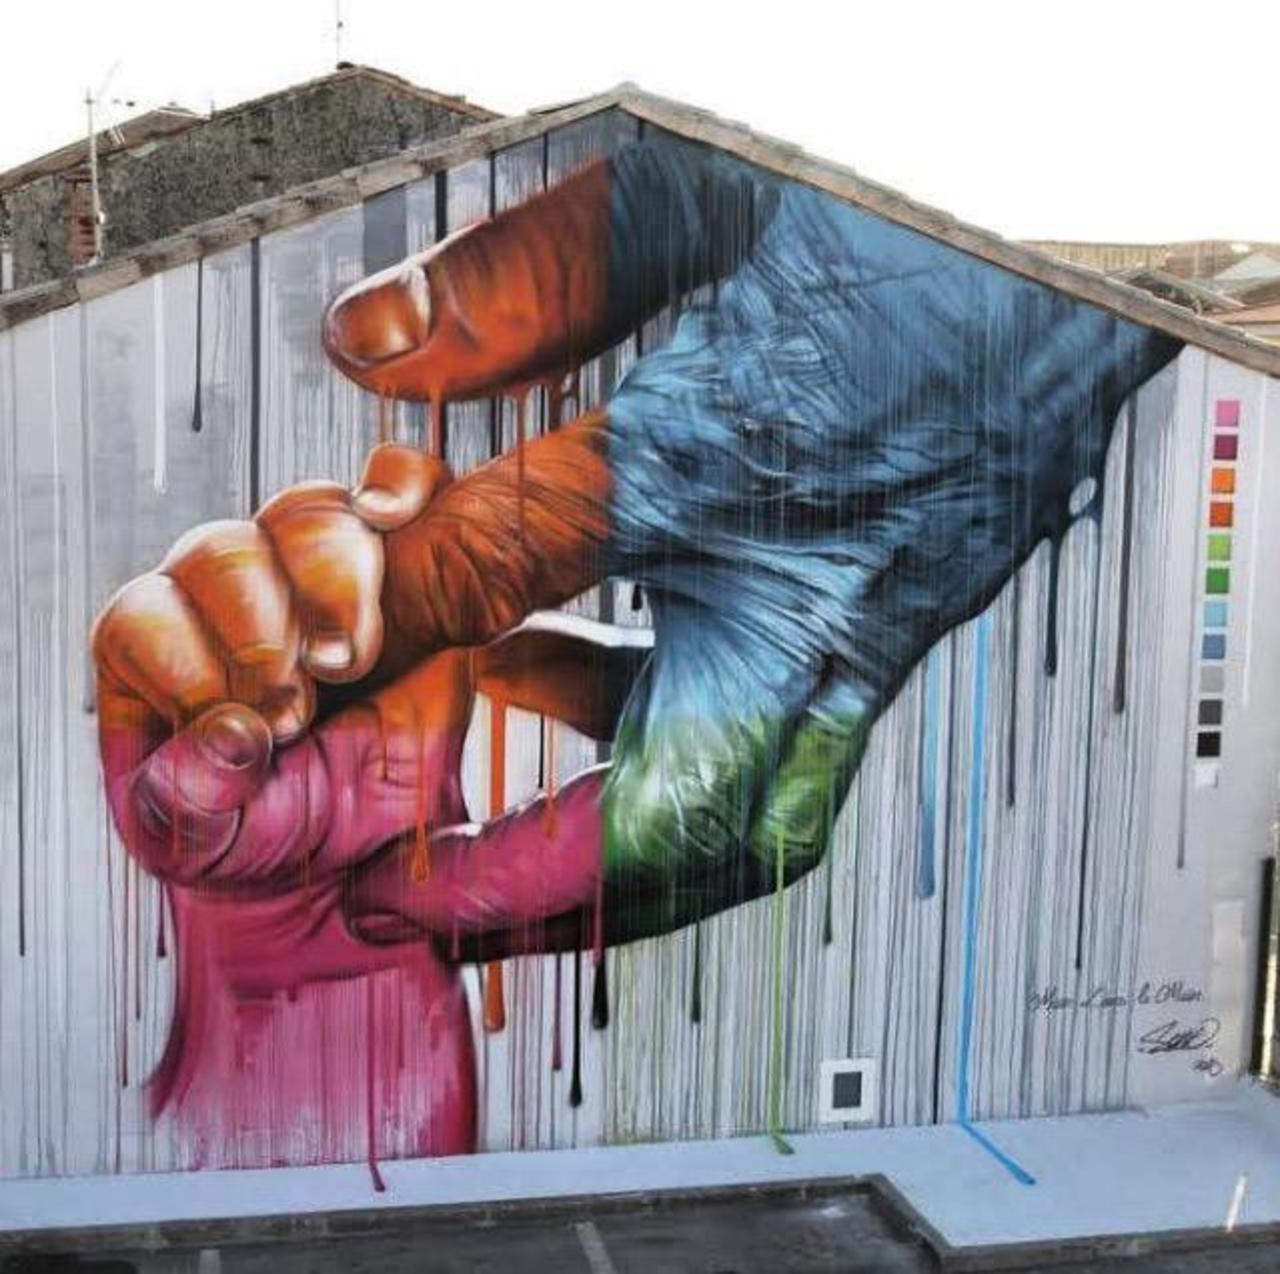 Seno Street Art 

#art #graffiti #mural #streetart http://t.co/uF3iSCbzel